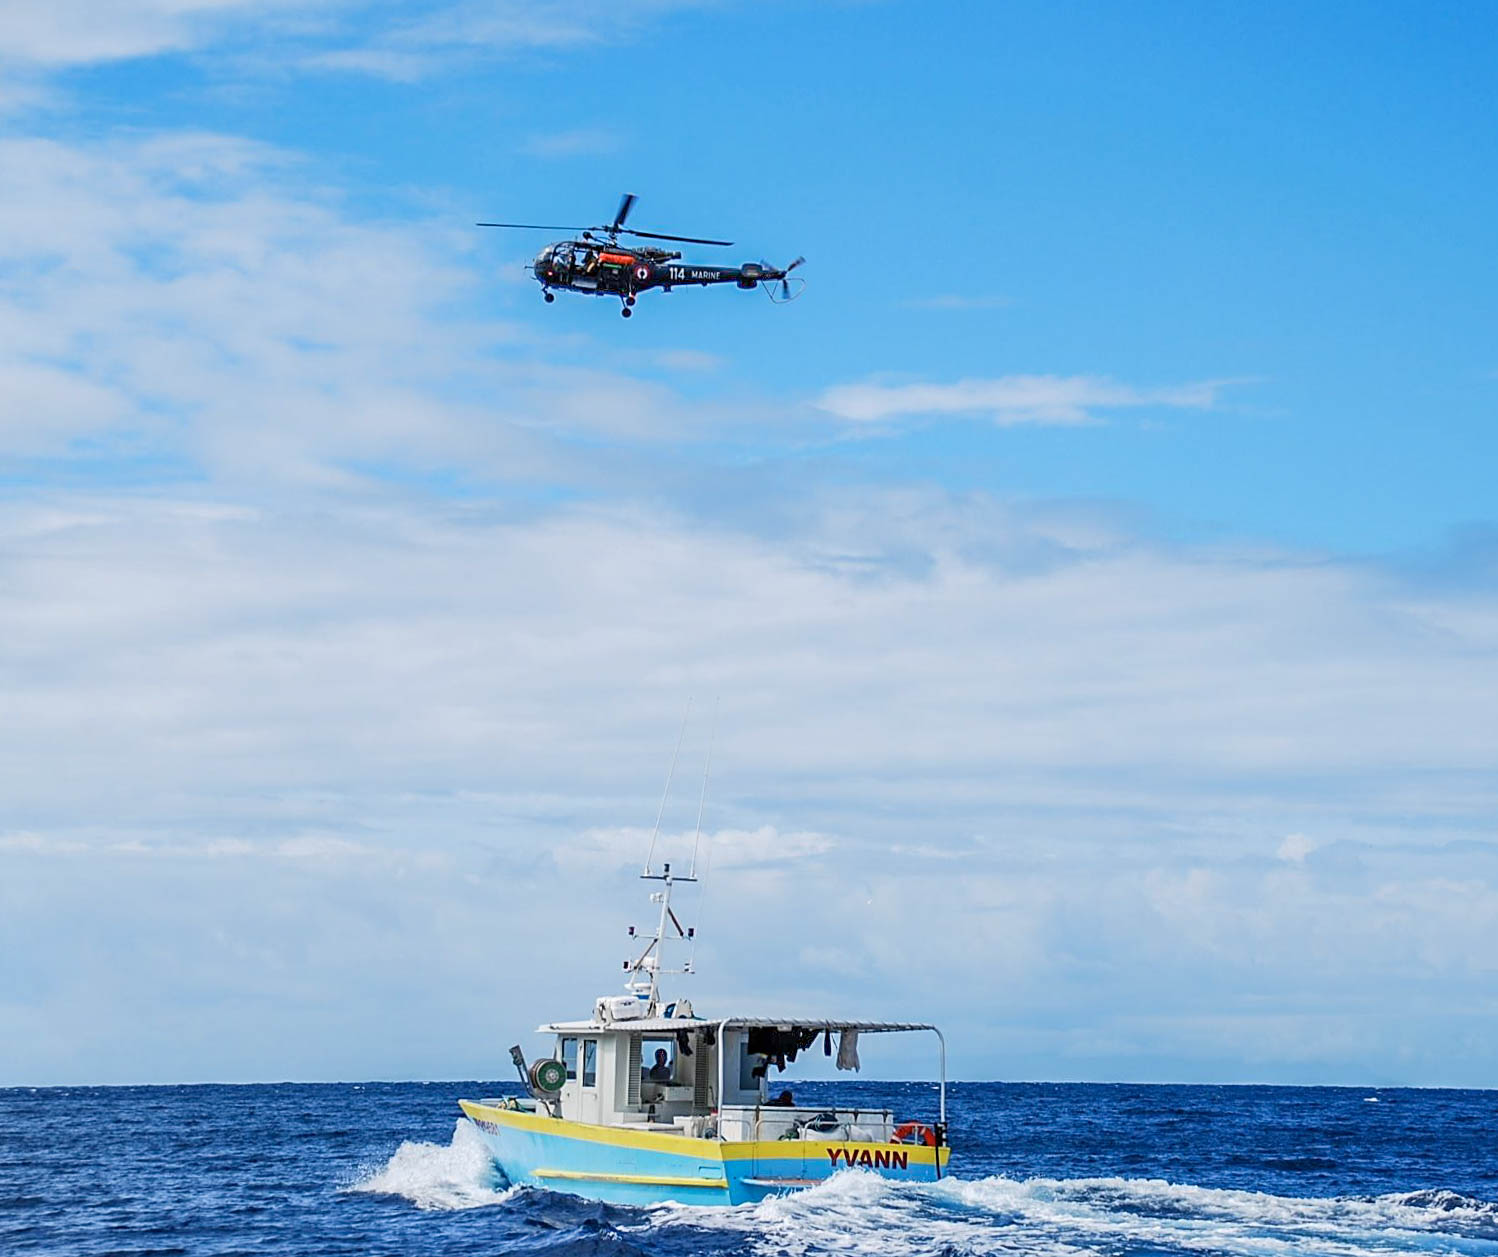 Un hélicoptère Alouette III intercepte un bateau de pêche